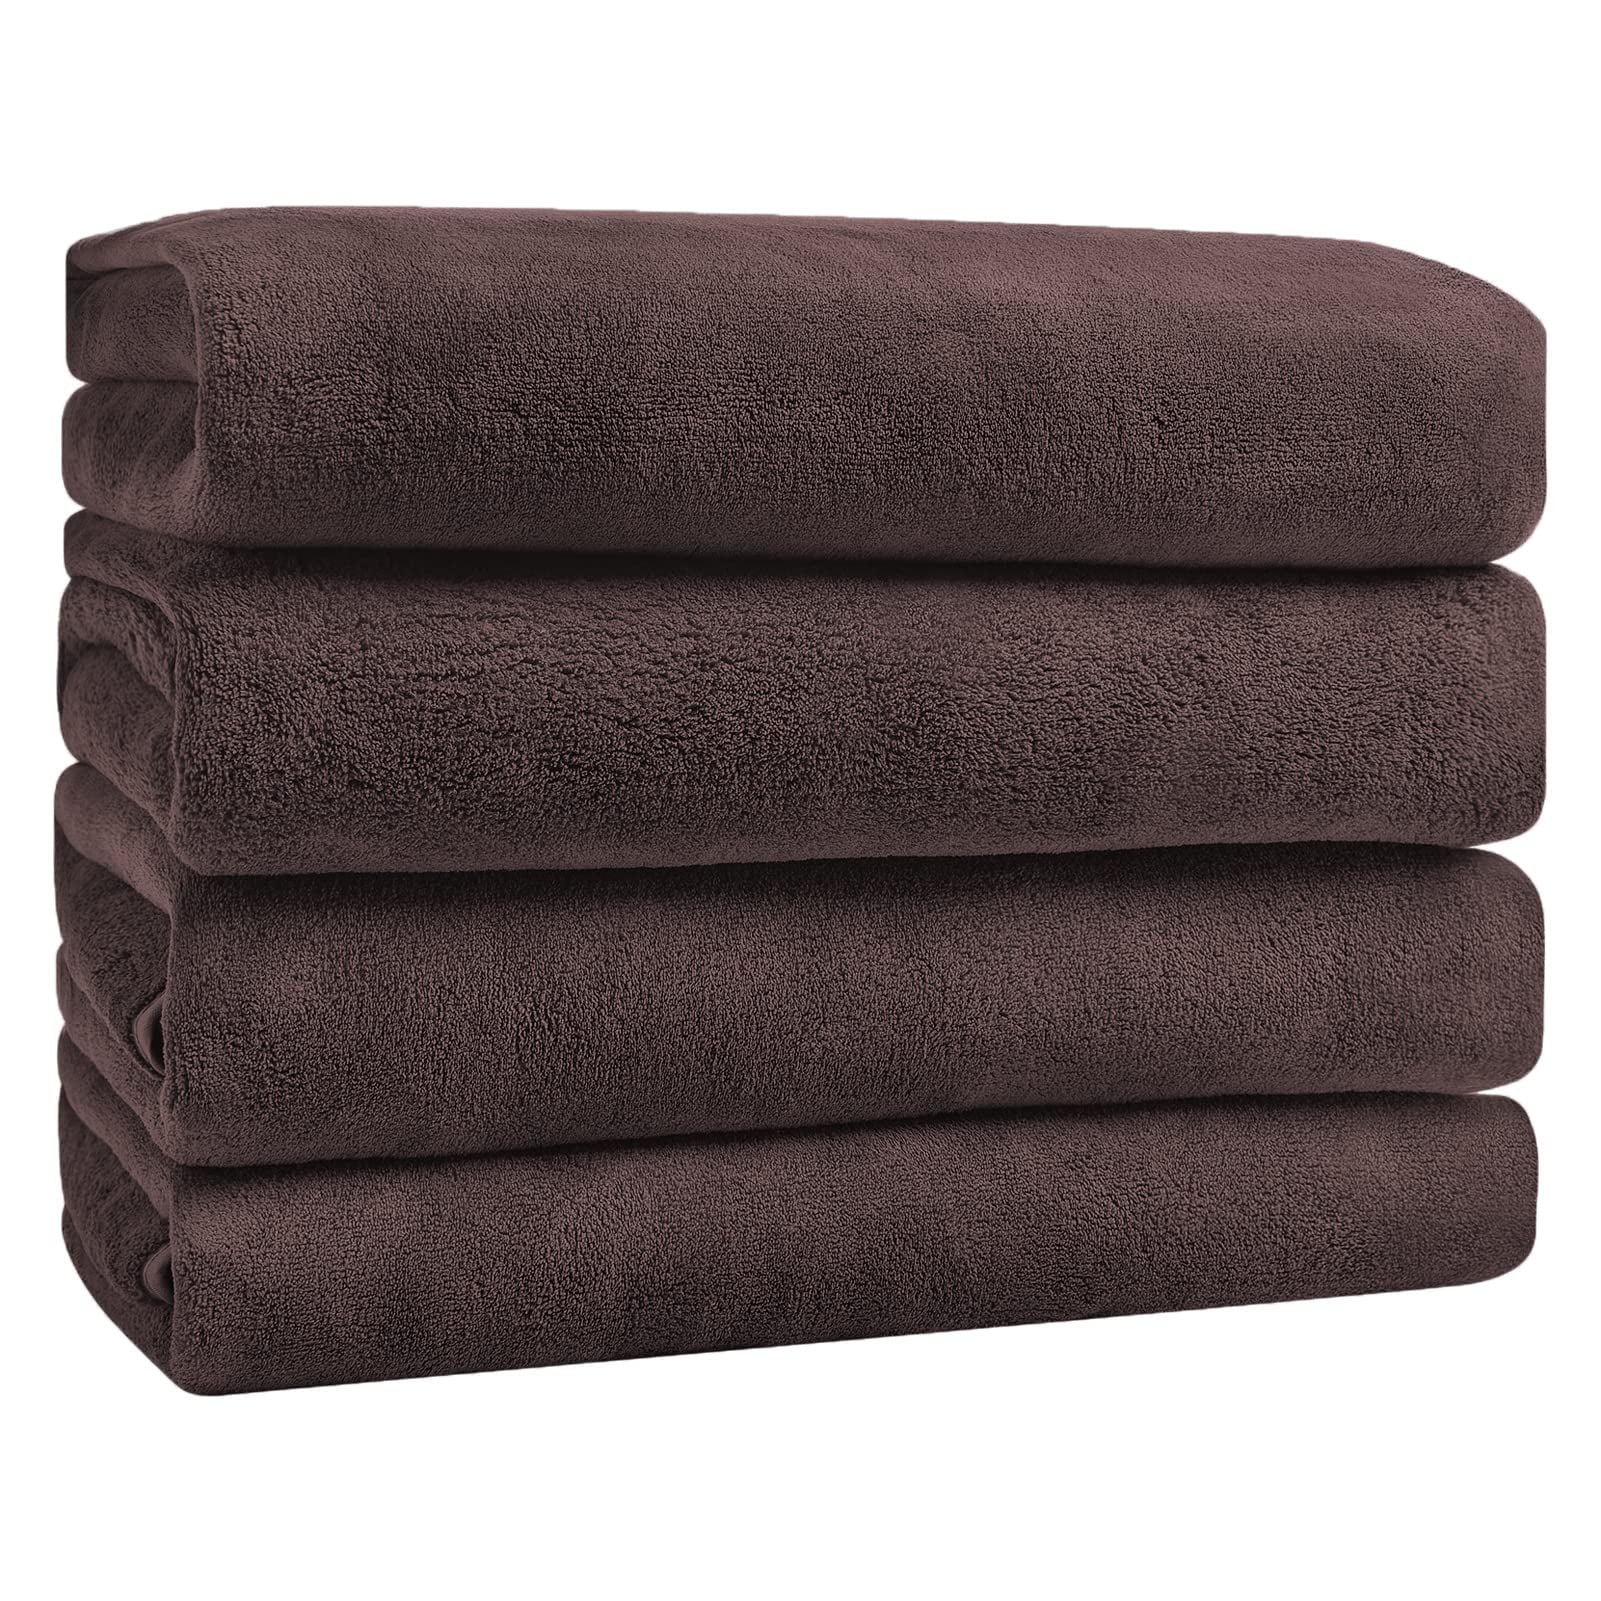 Graceaier Ultra Soft Bath Towel Set - Quick Drying -2 Bath Towels